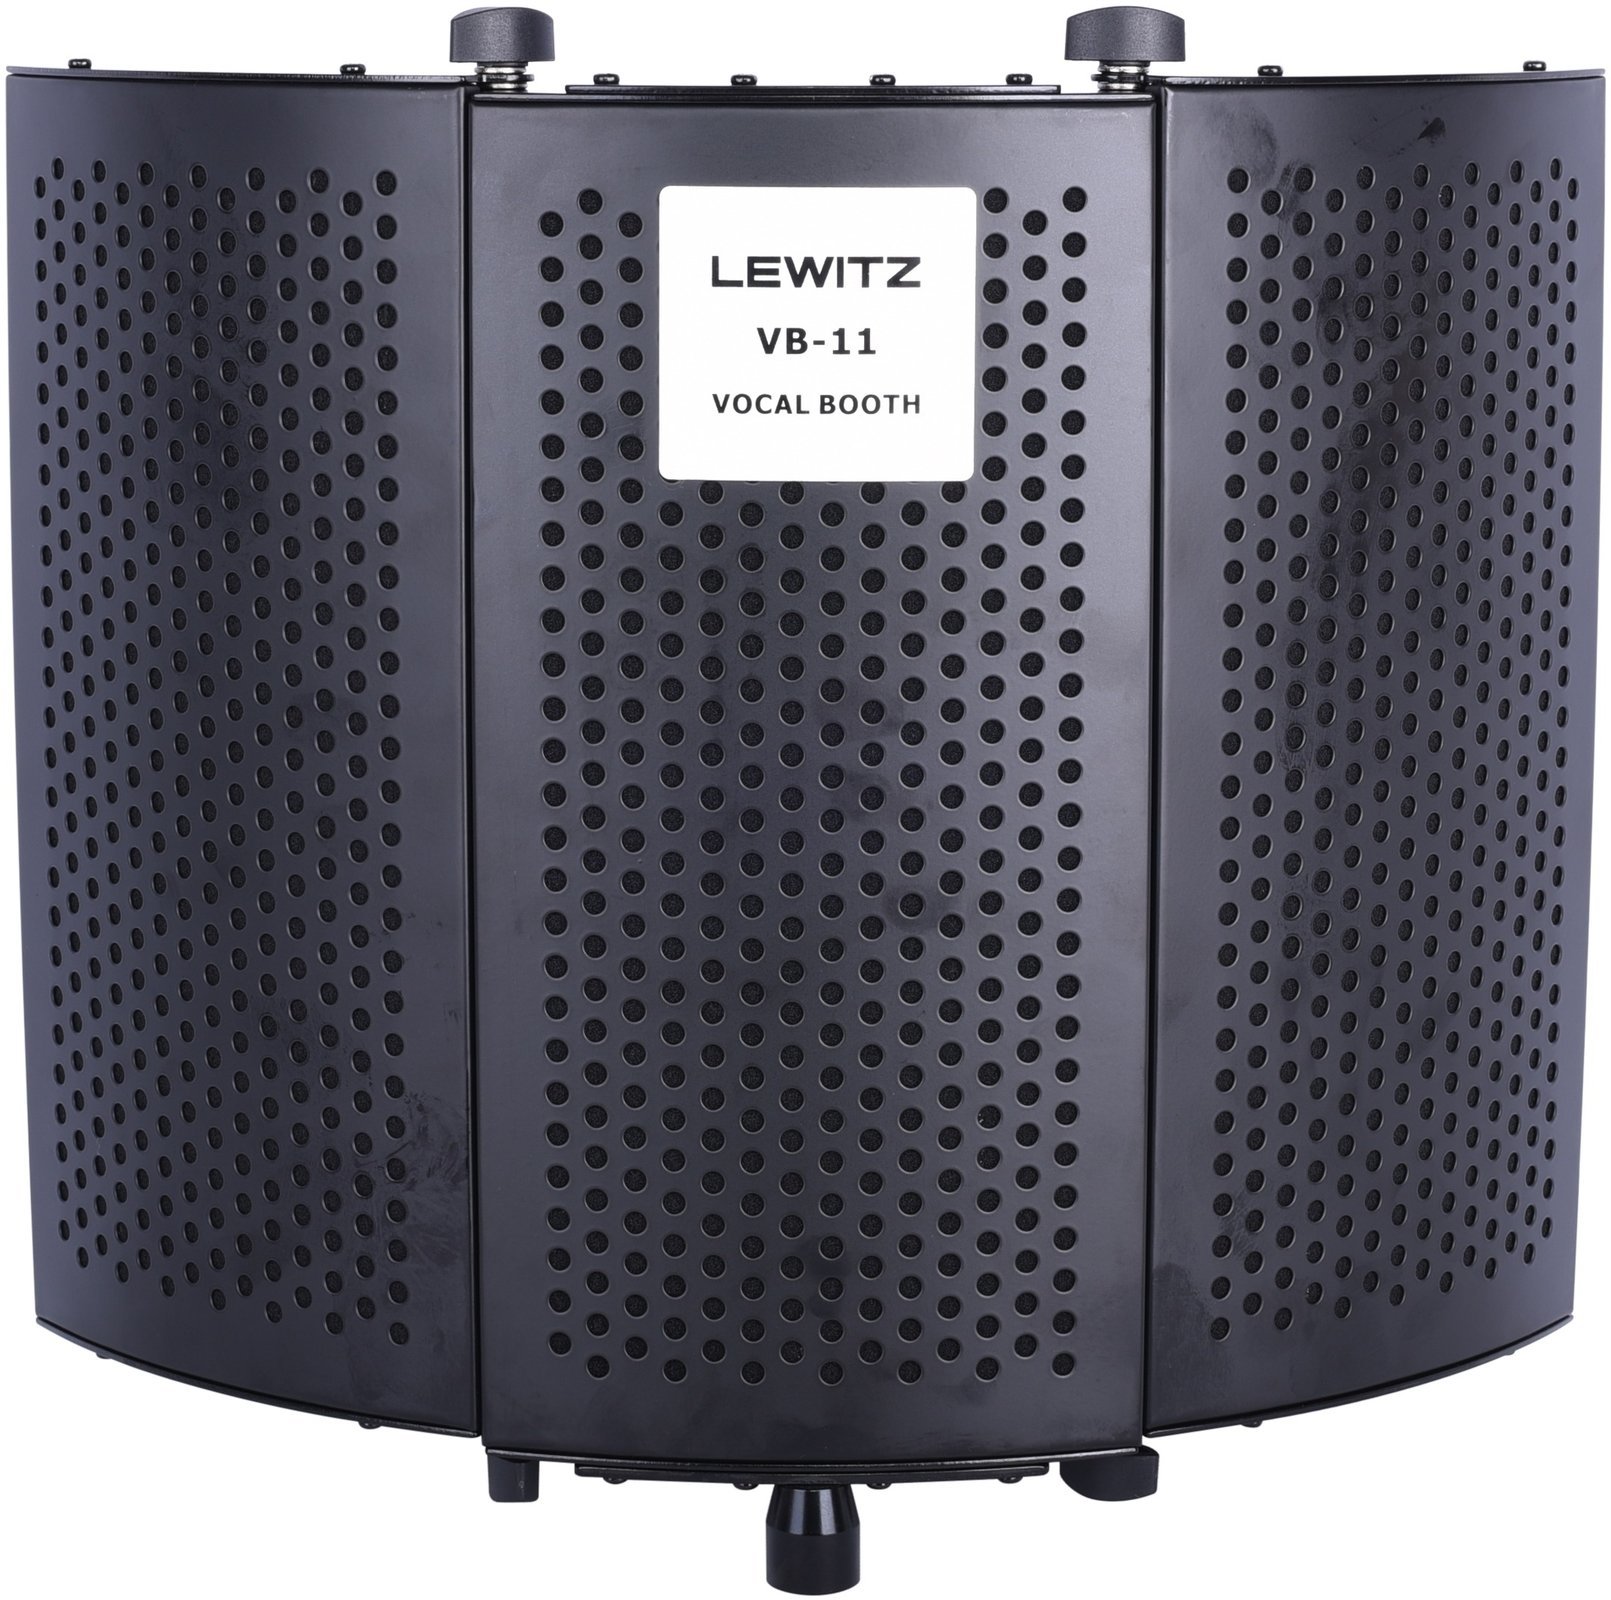 Pannello acustico portatile Lewitz VB-11